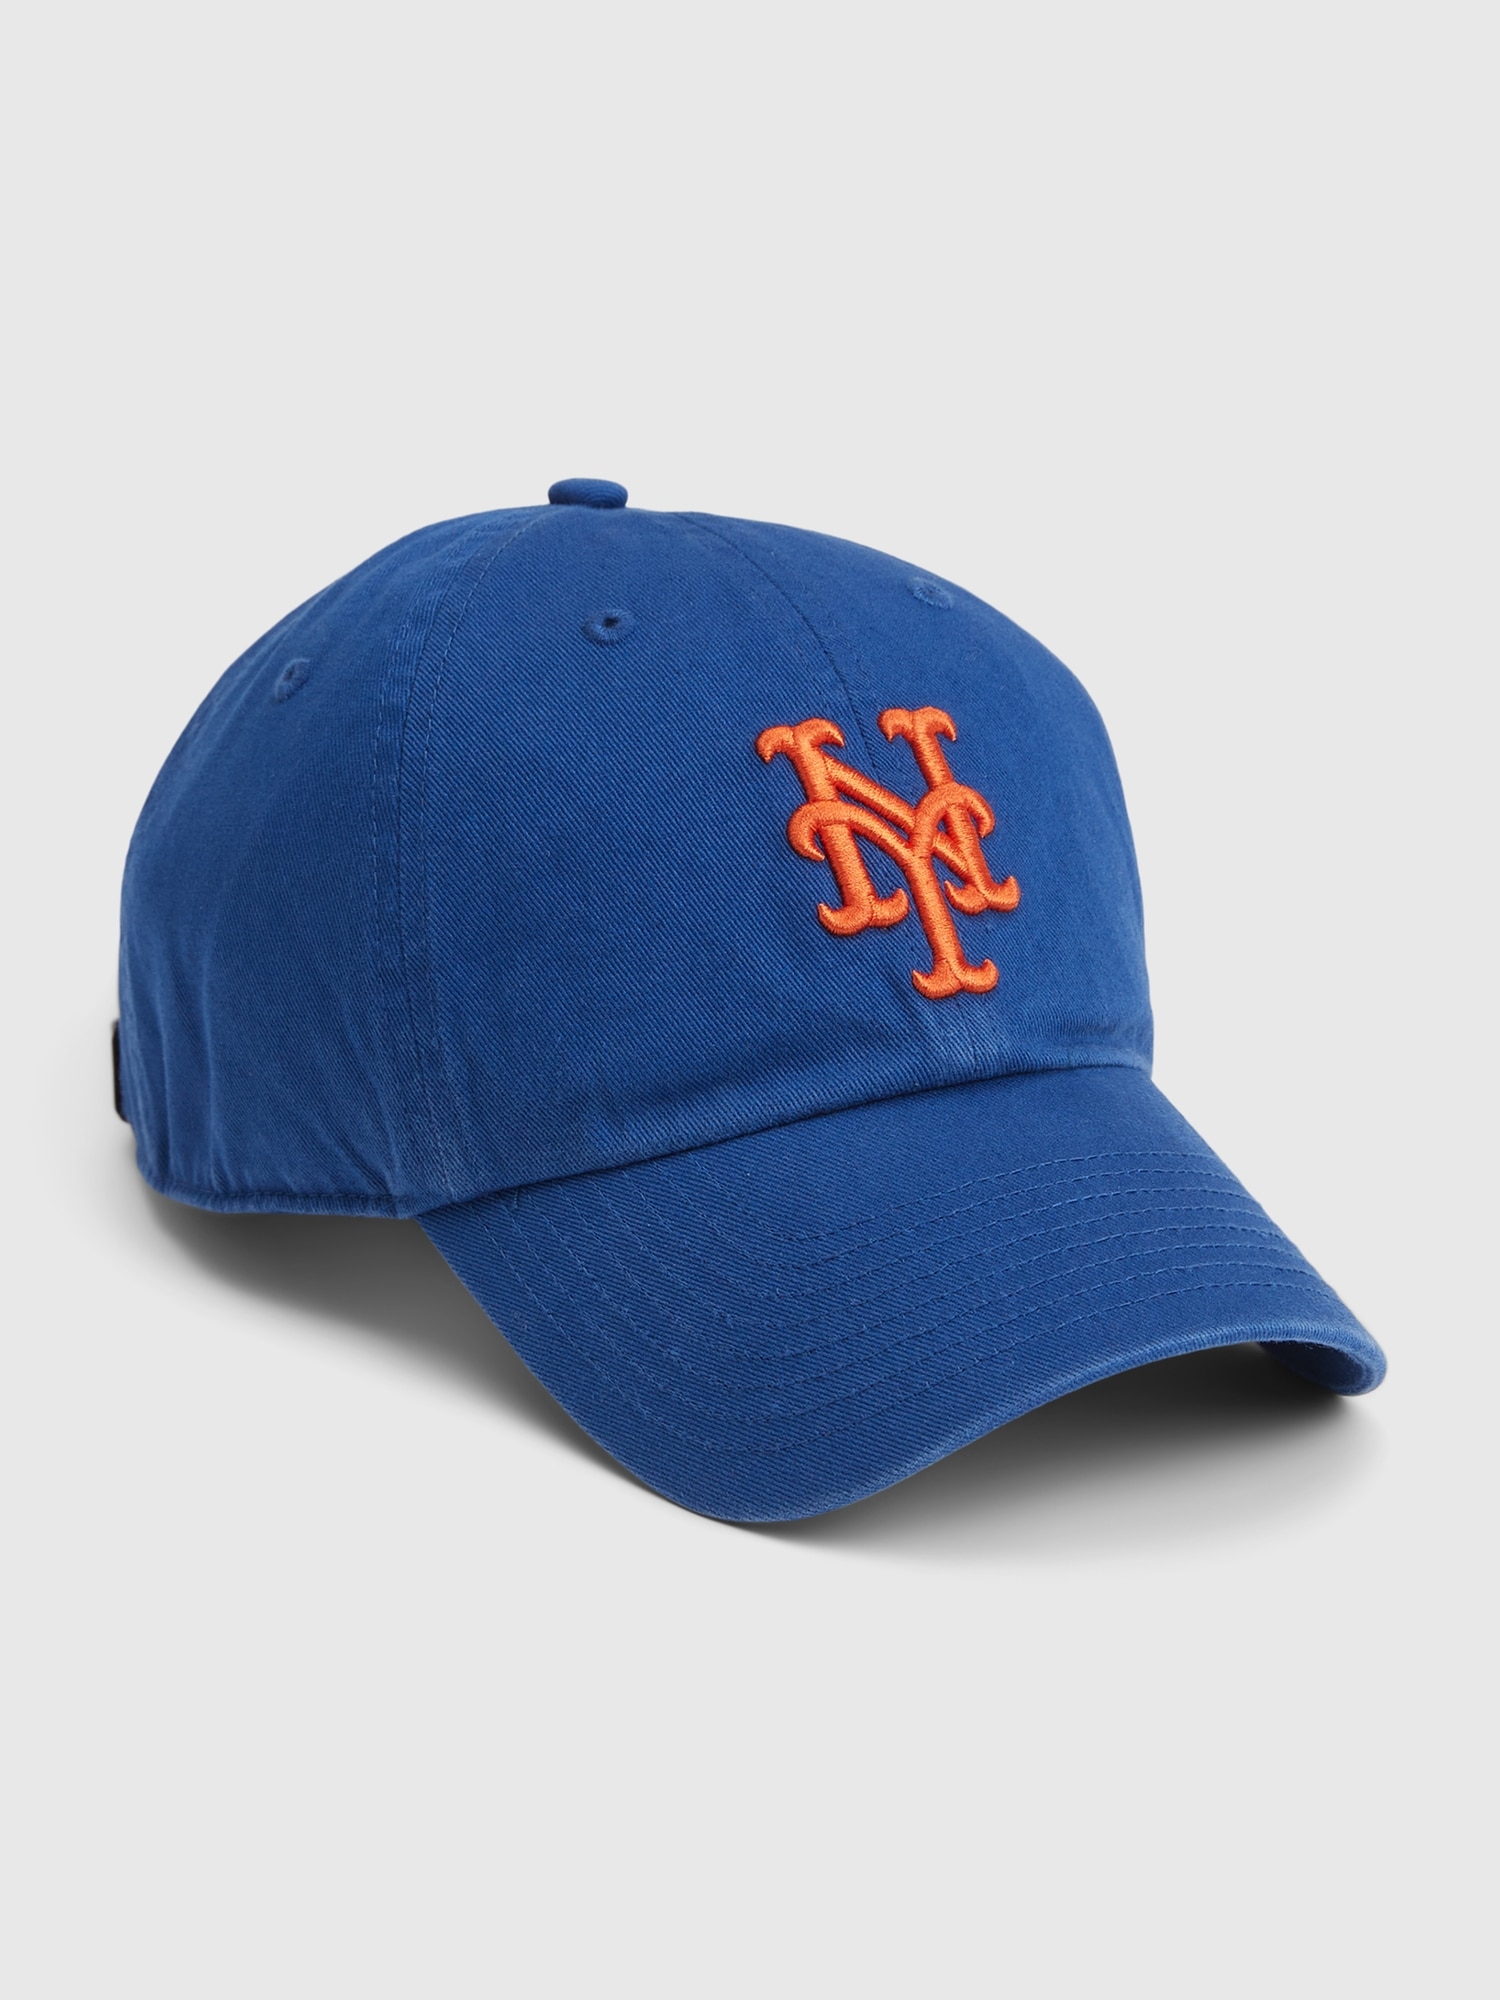 Gap New York Mets Baseball Hat